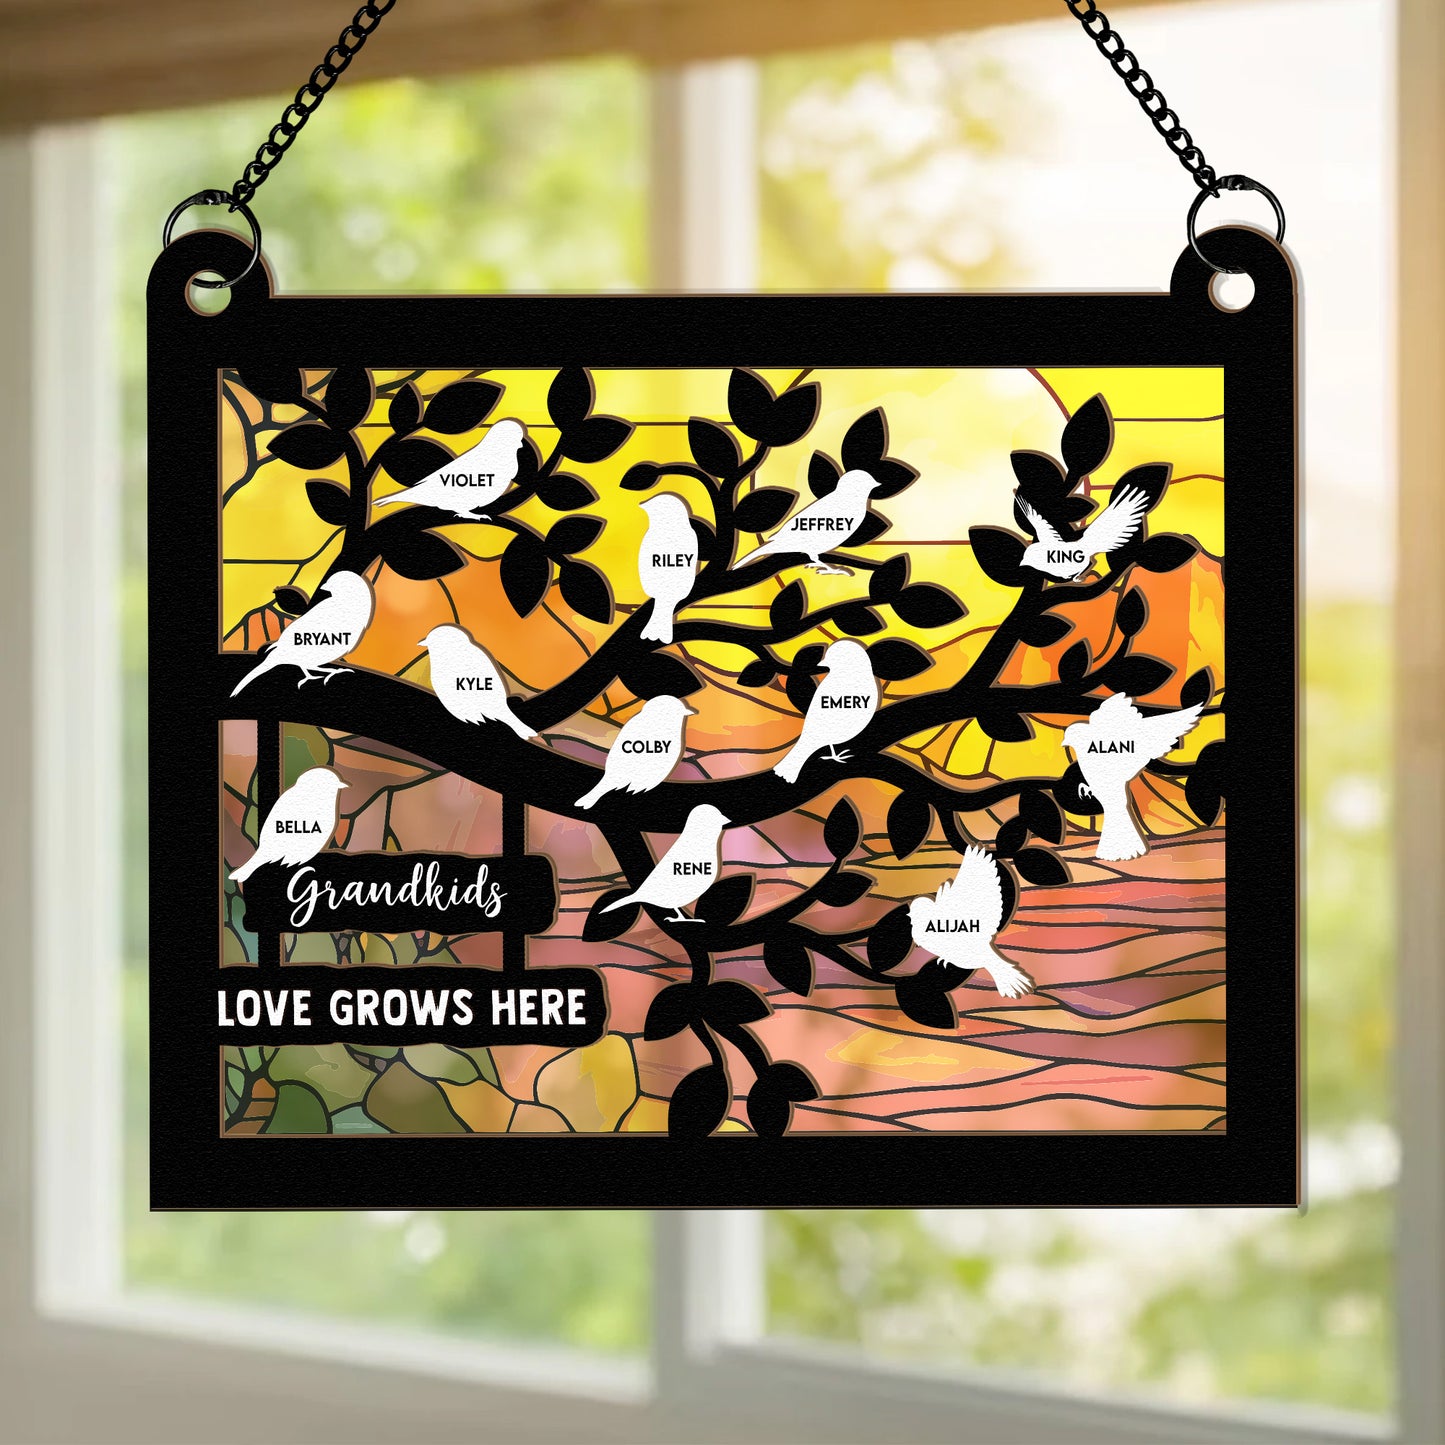 Grandkids Love Grows Here Personalized Window Hanging Suncatcher Ornament